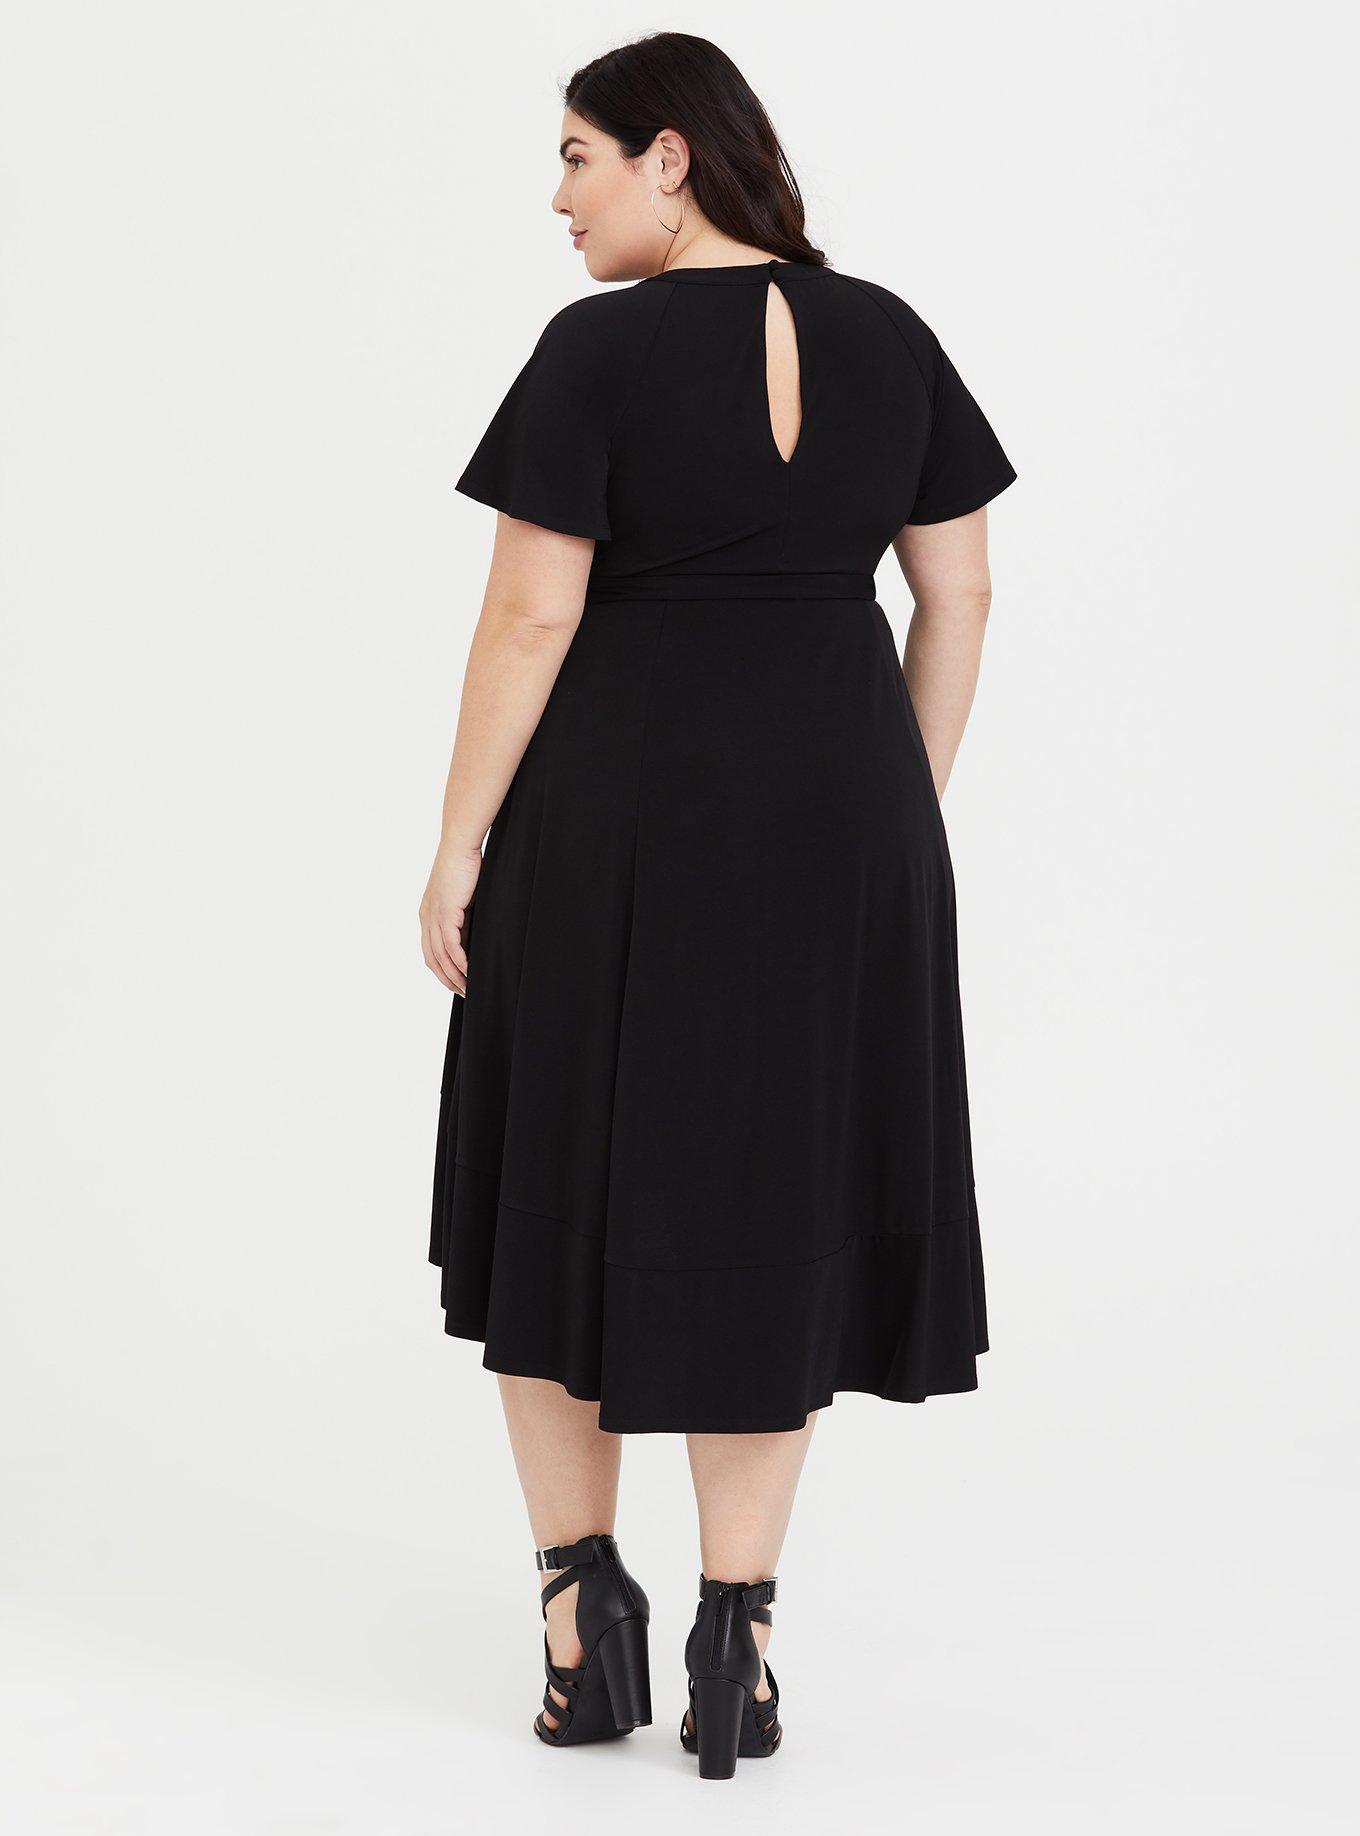 Plus Size - Black Studio Knit Hi-Lo Skater Dress - Torrid